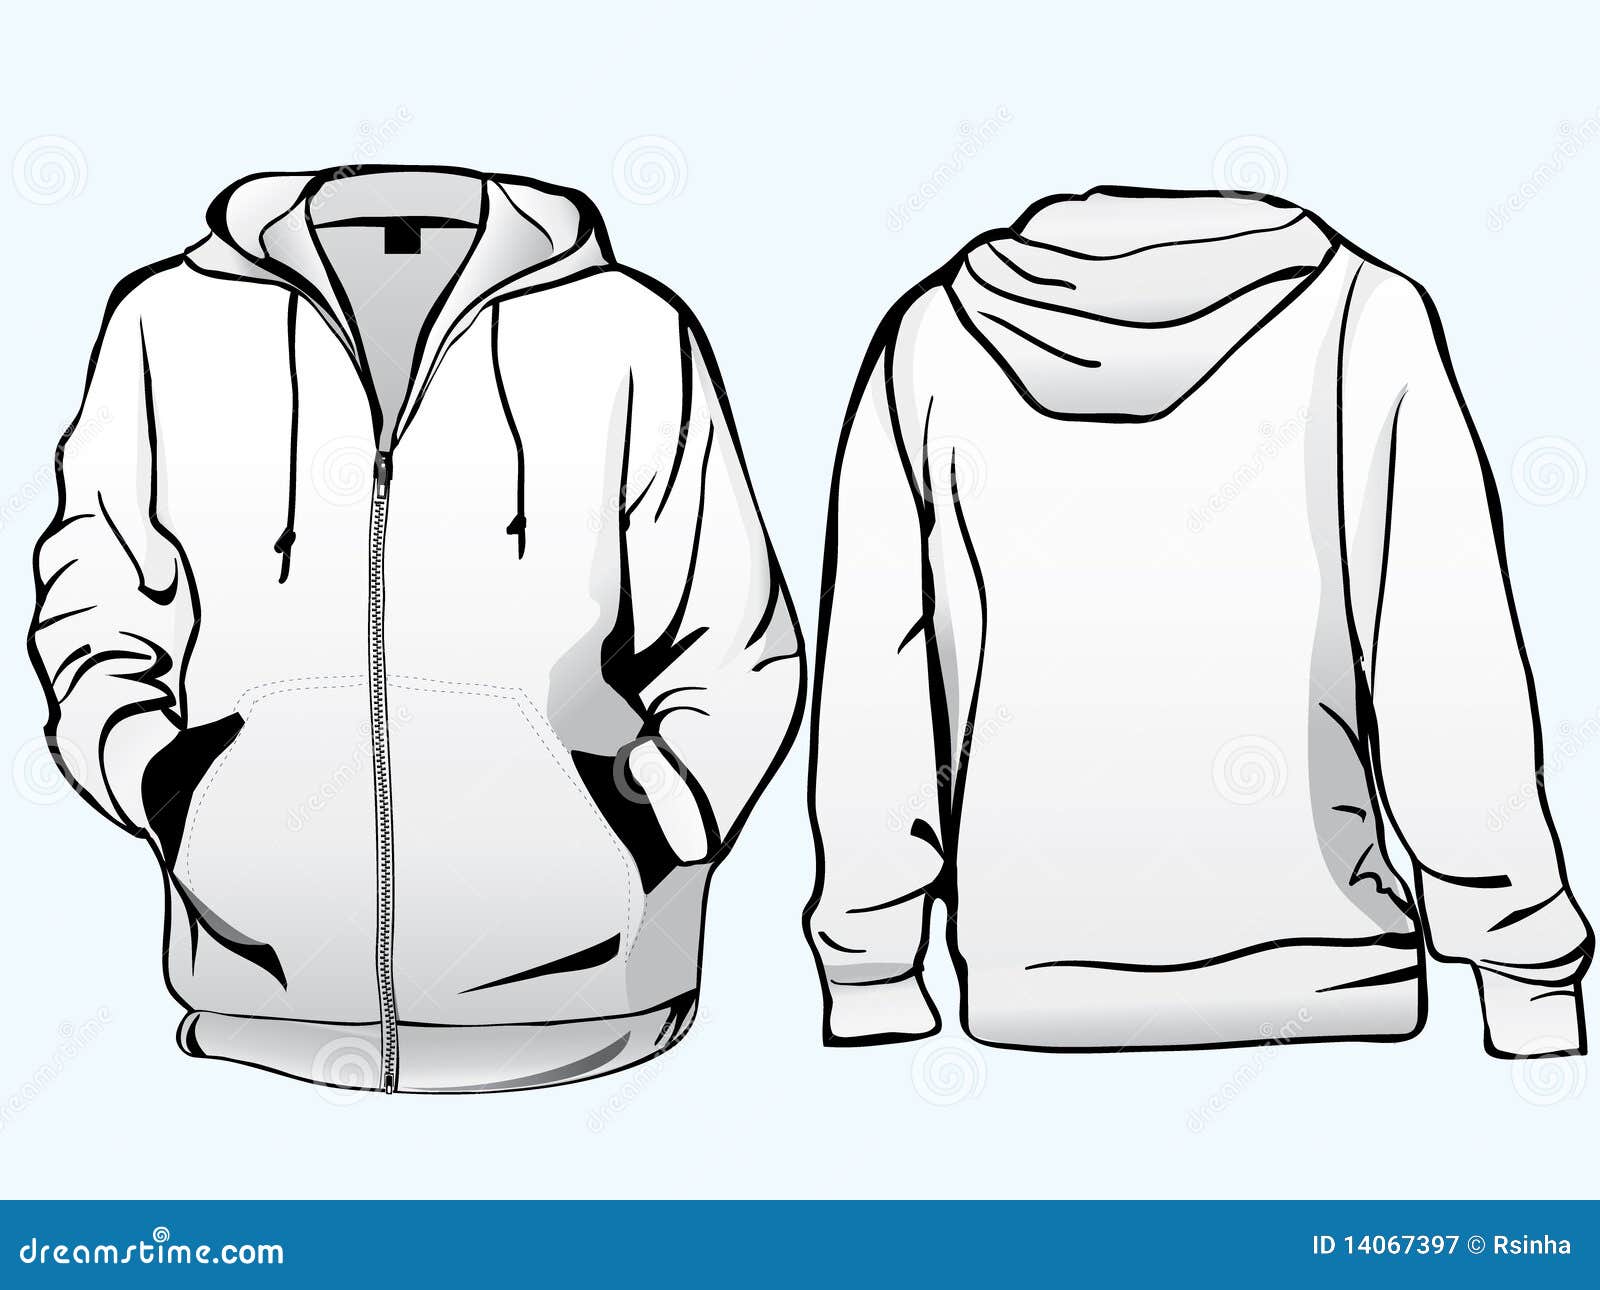 jacket or sweatshirt template